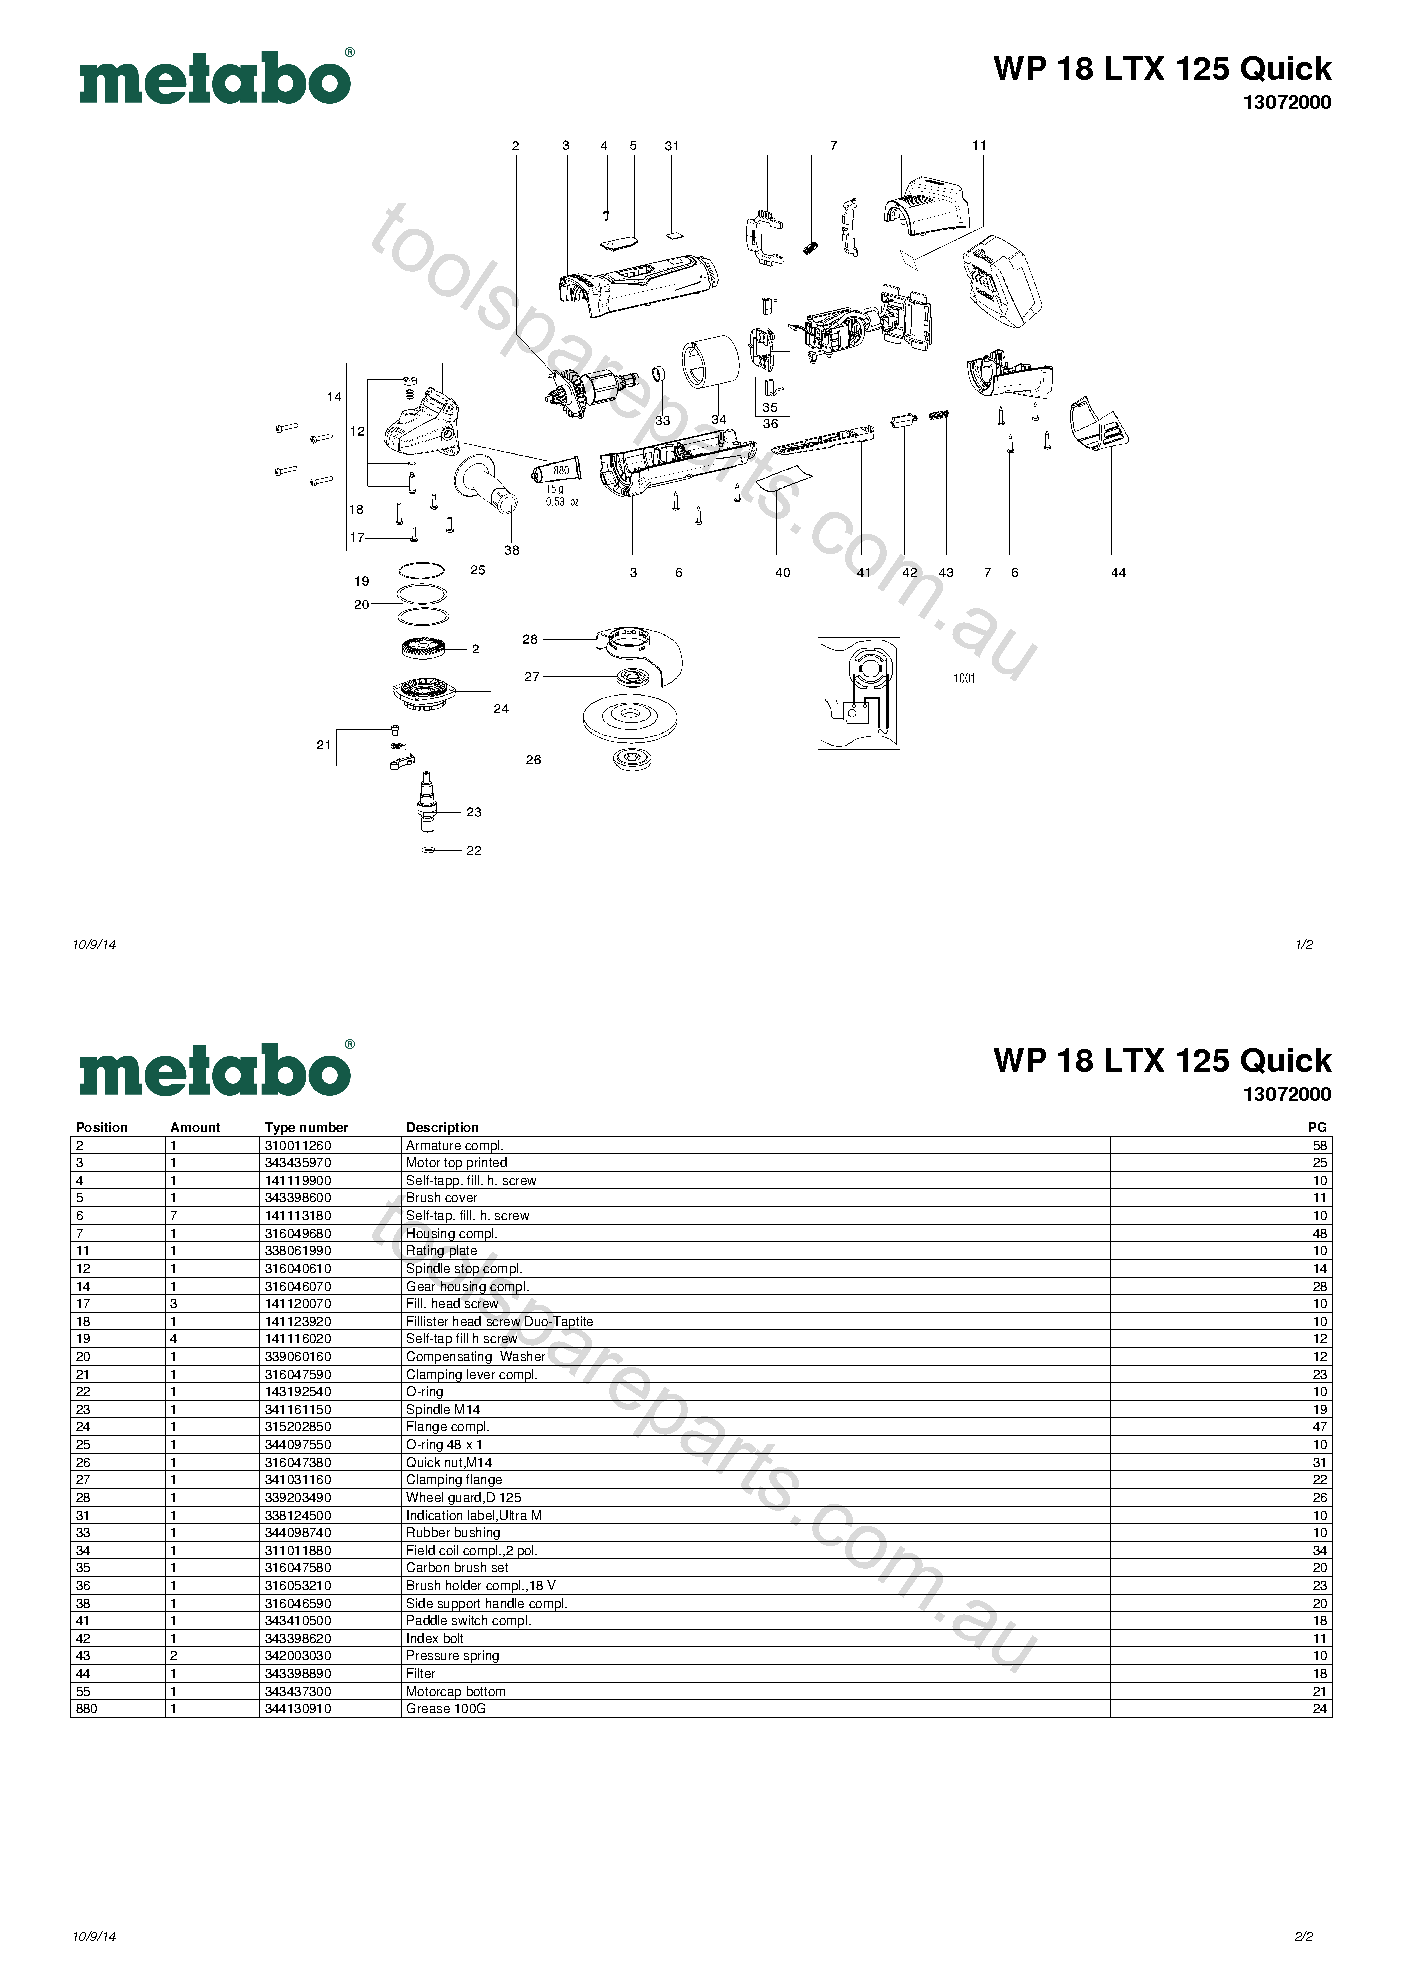 Metabo WP 18 LTX 125 Quick 13072000  Diagram 1